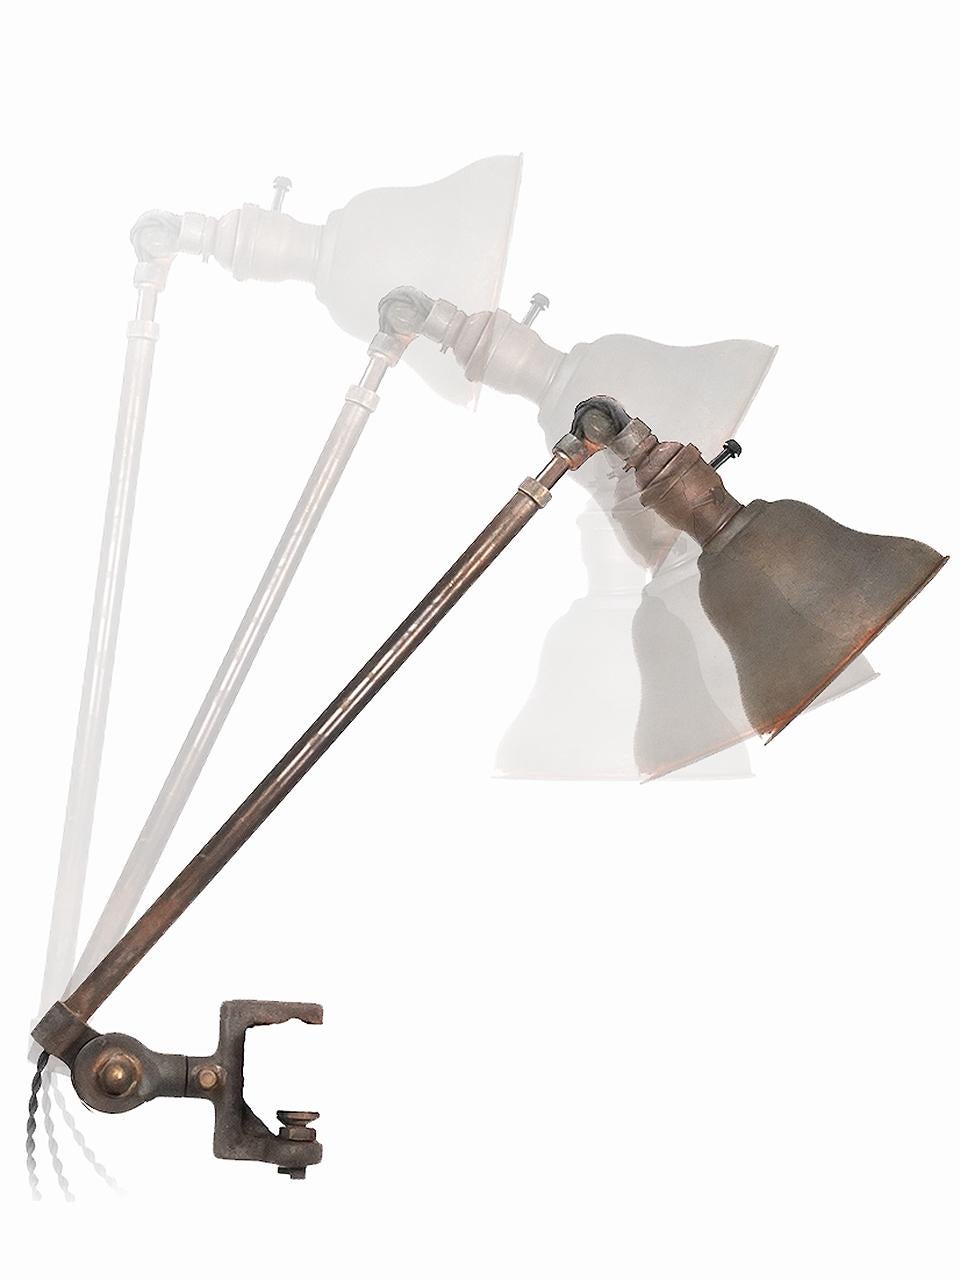 vintage clamp lamp